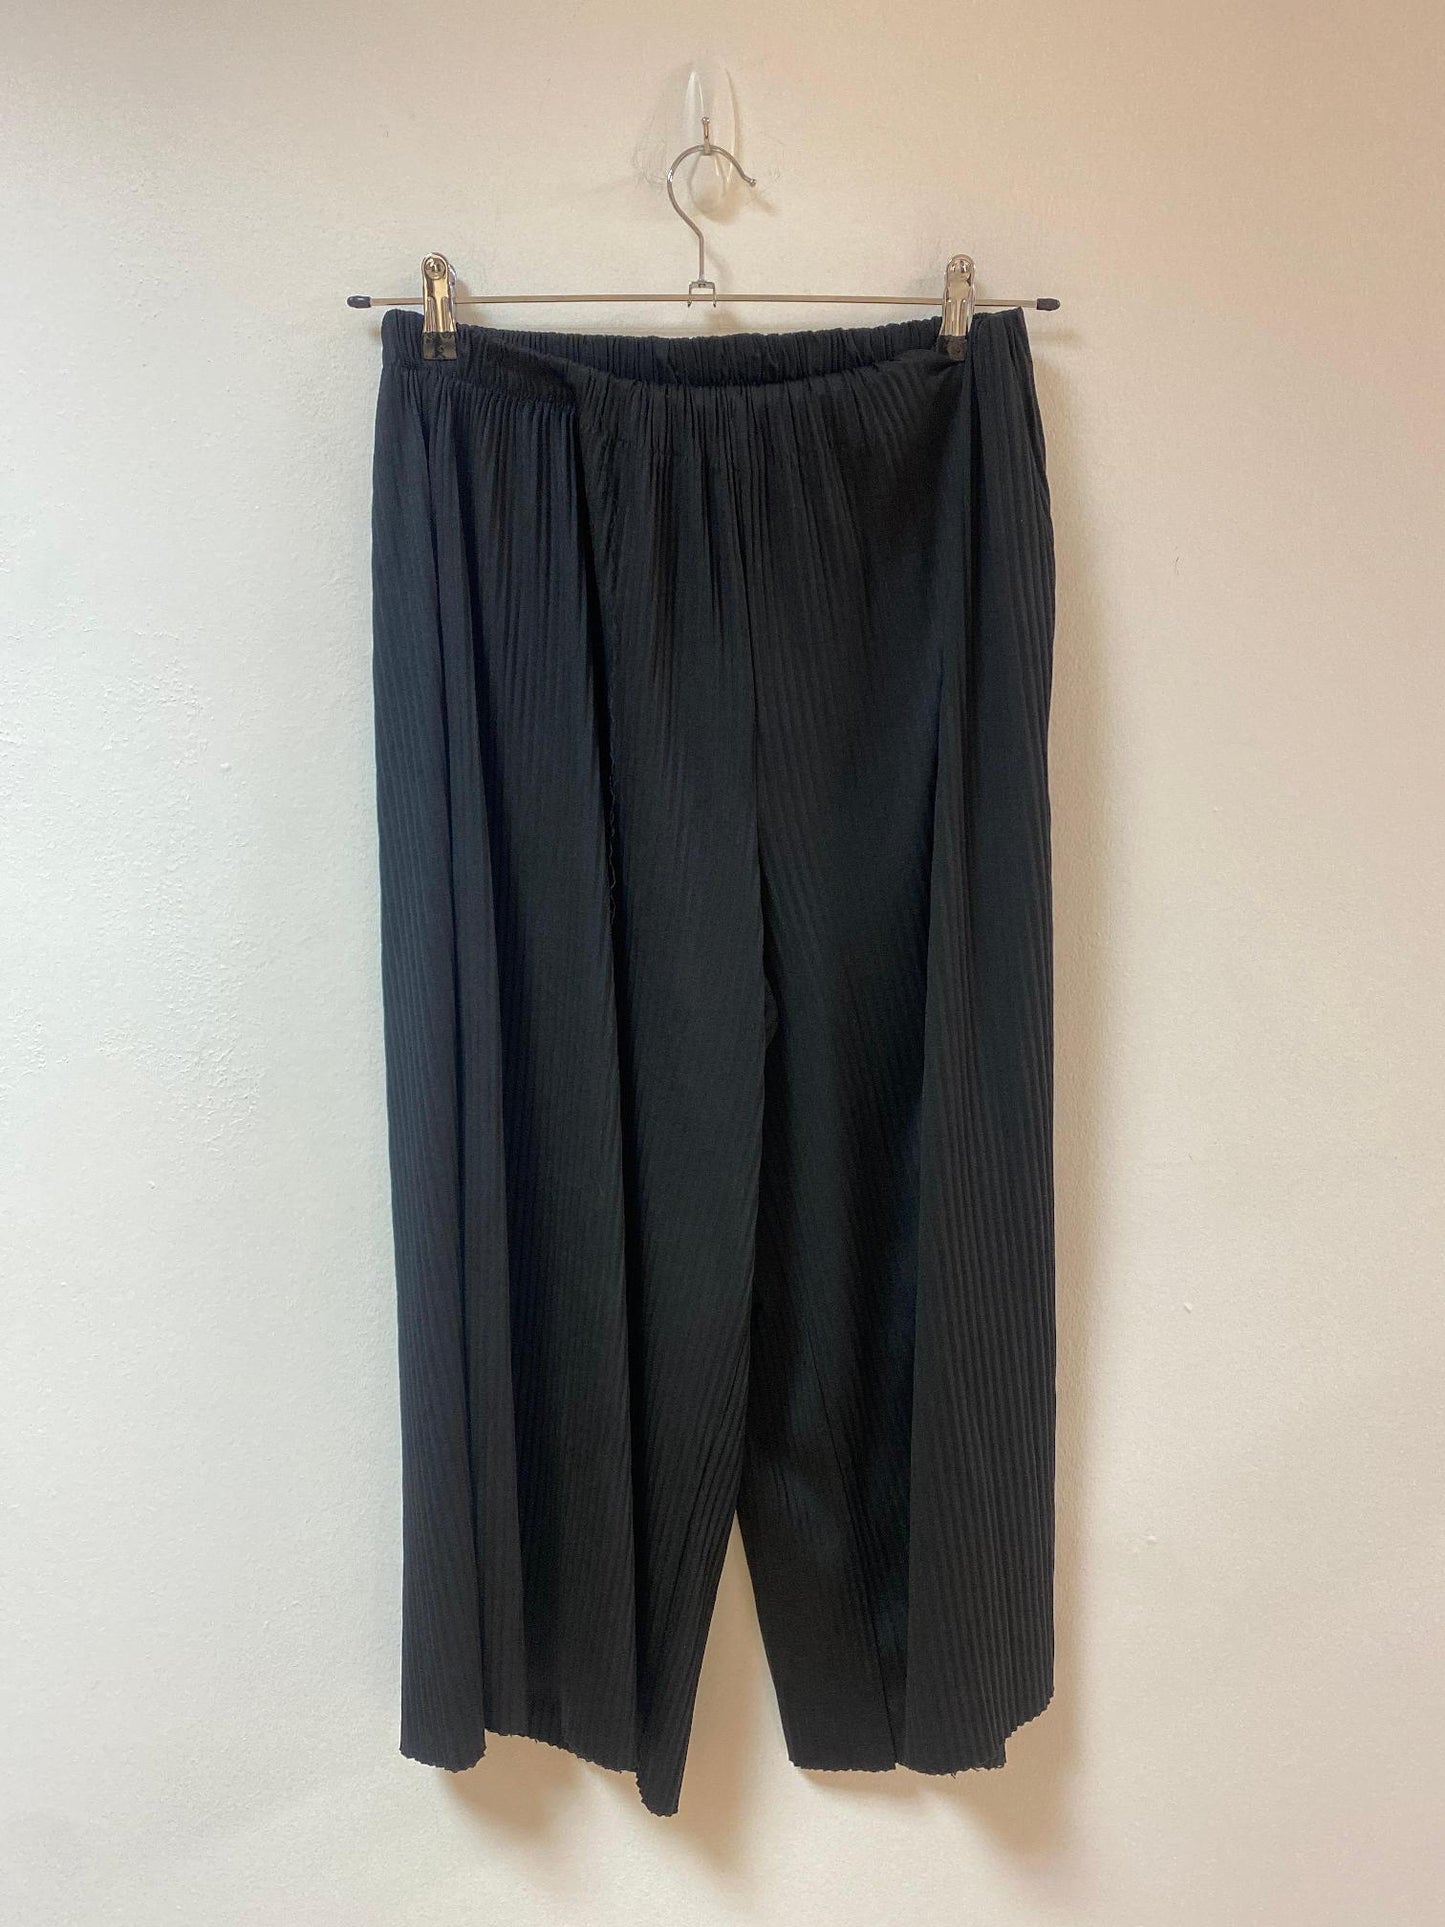 Black plisse high rise culottes, ASOS, size 10 - Damaged Item Sale